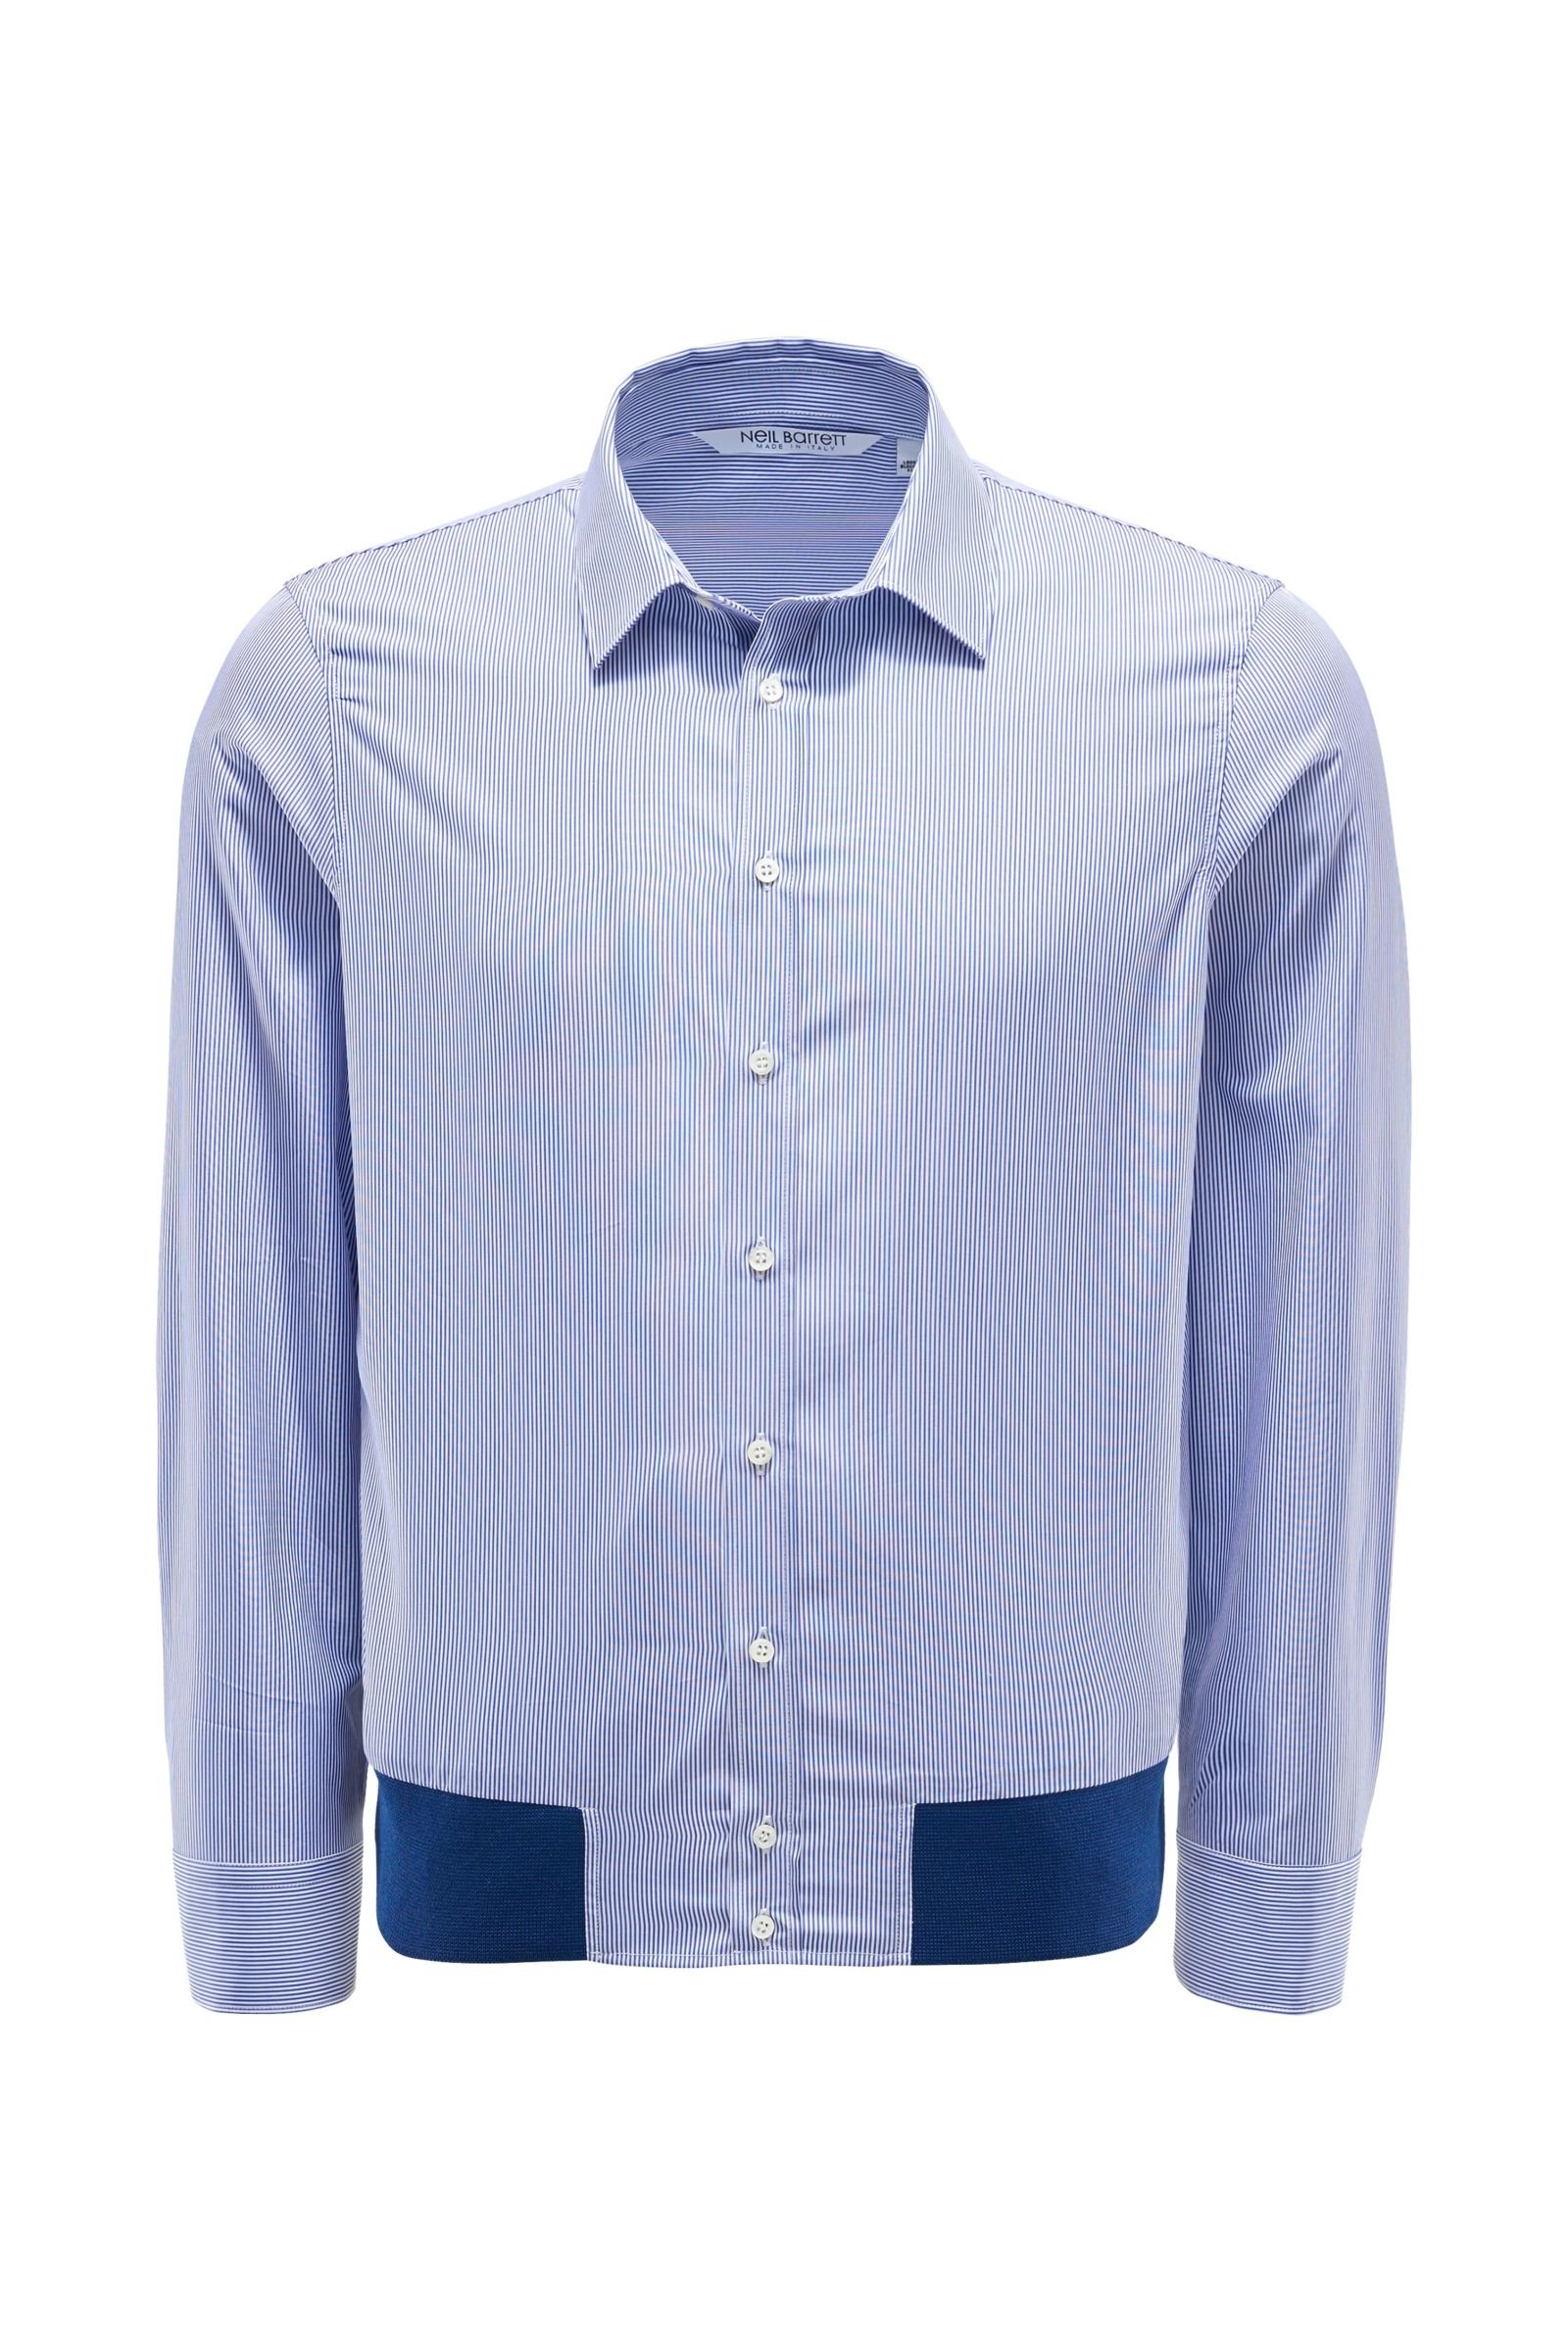 Casual shirt slim collar dark blue striped